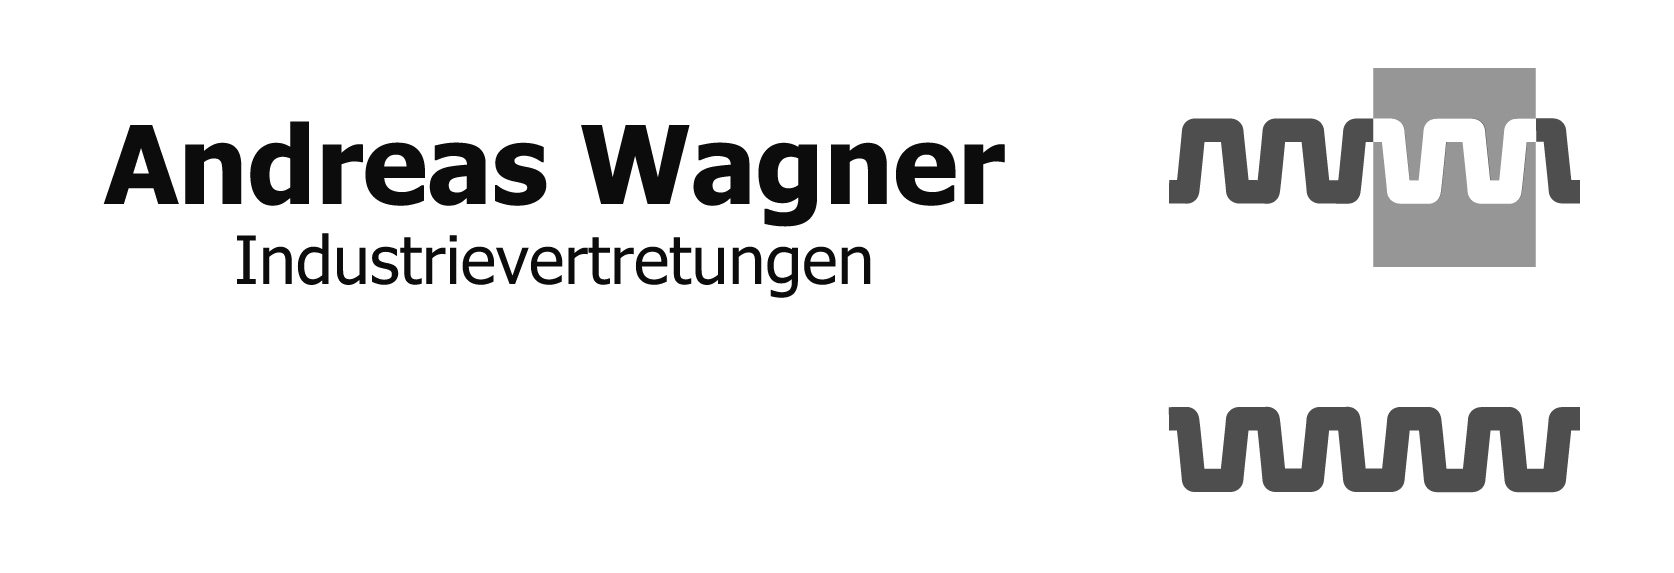 Andreas Wagner - Industrievertretungen Logo